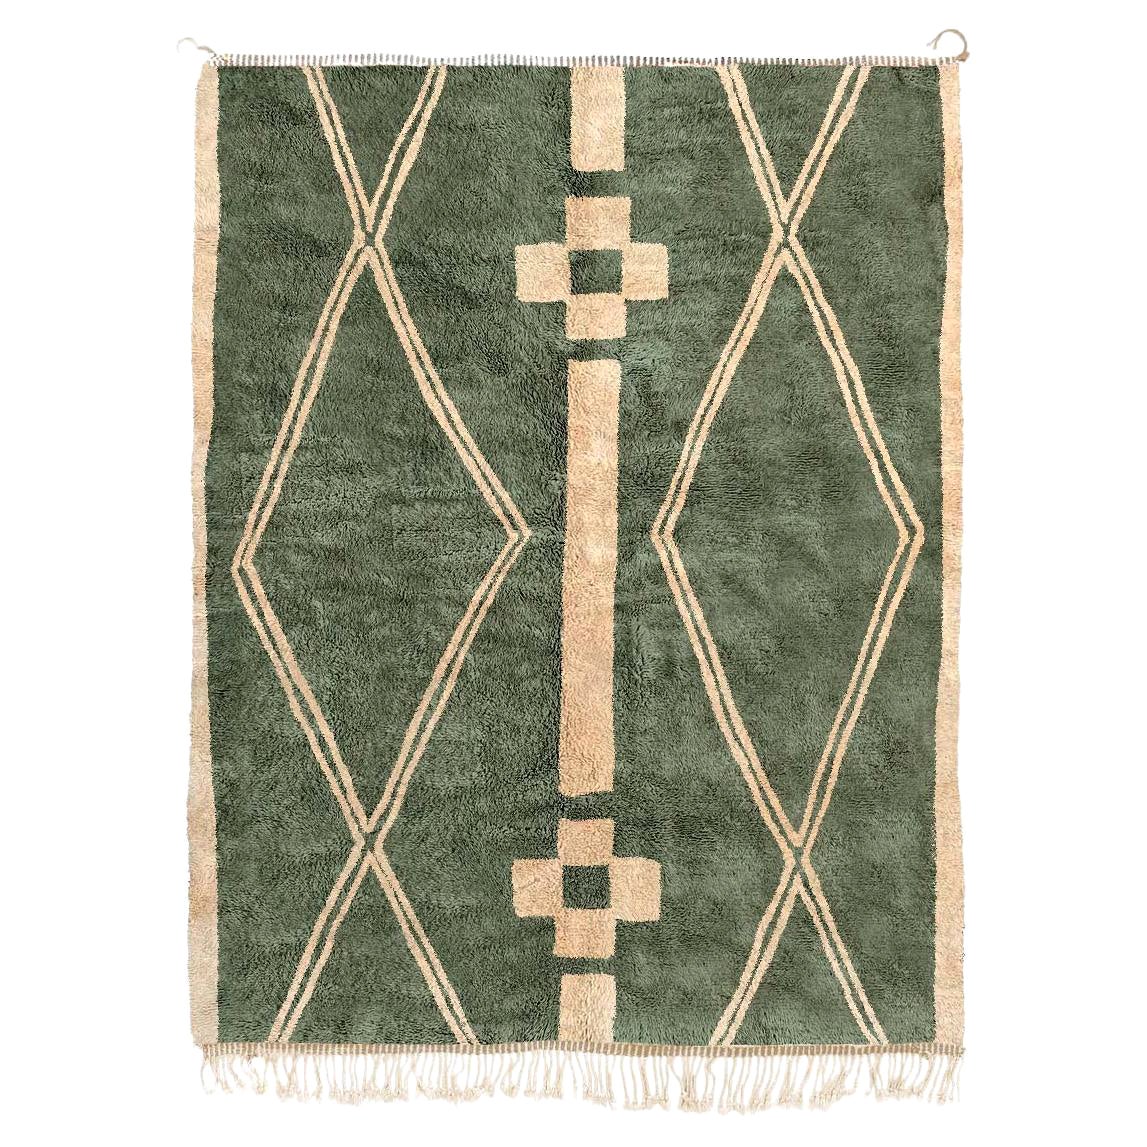 Moroccan Beni Mrirt rug 9’x12’, Tribal Pattern Green Shag Color rug, Custom-Made For Sale